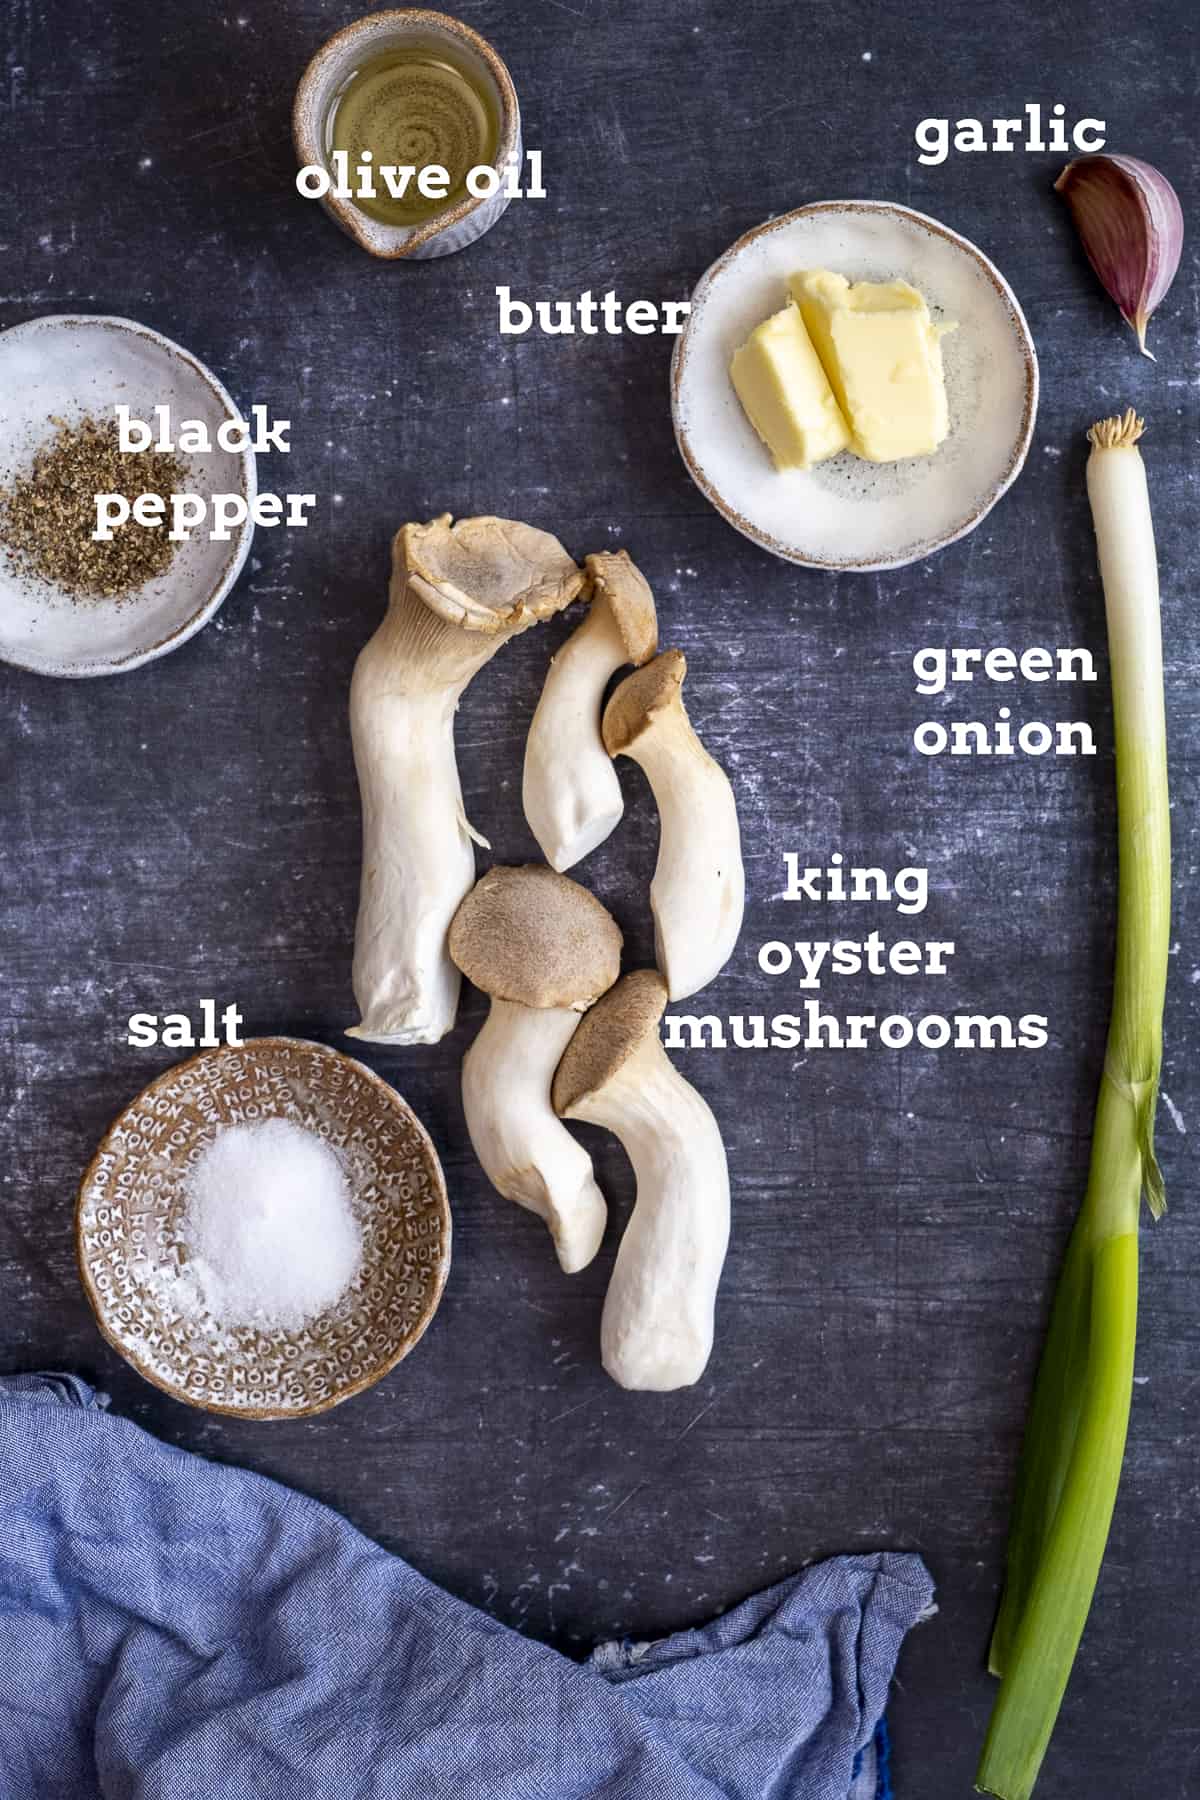 King oyster mushrooms, butter, oil, garlic, green onion, salt and pepper on a dark background.